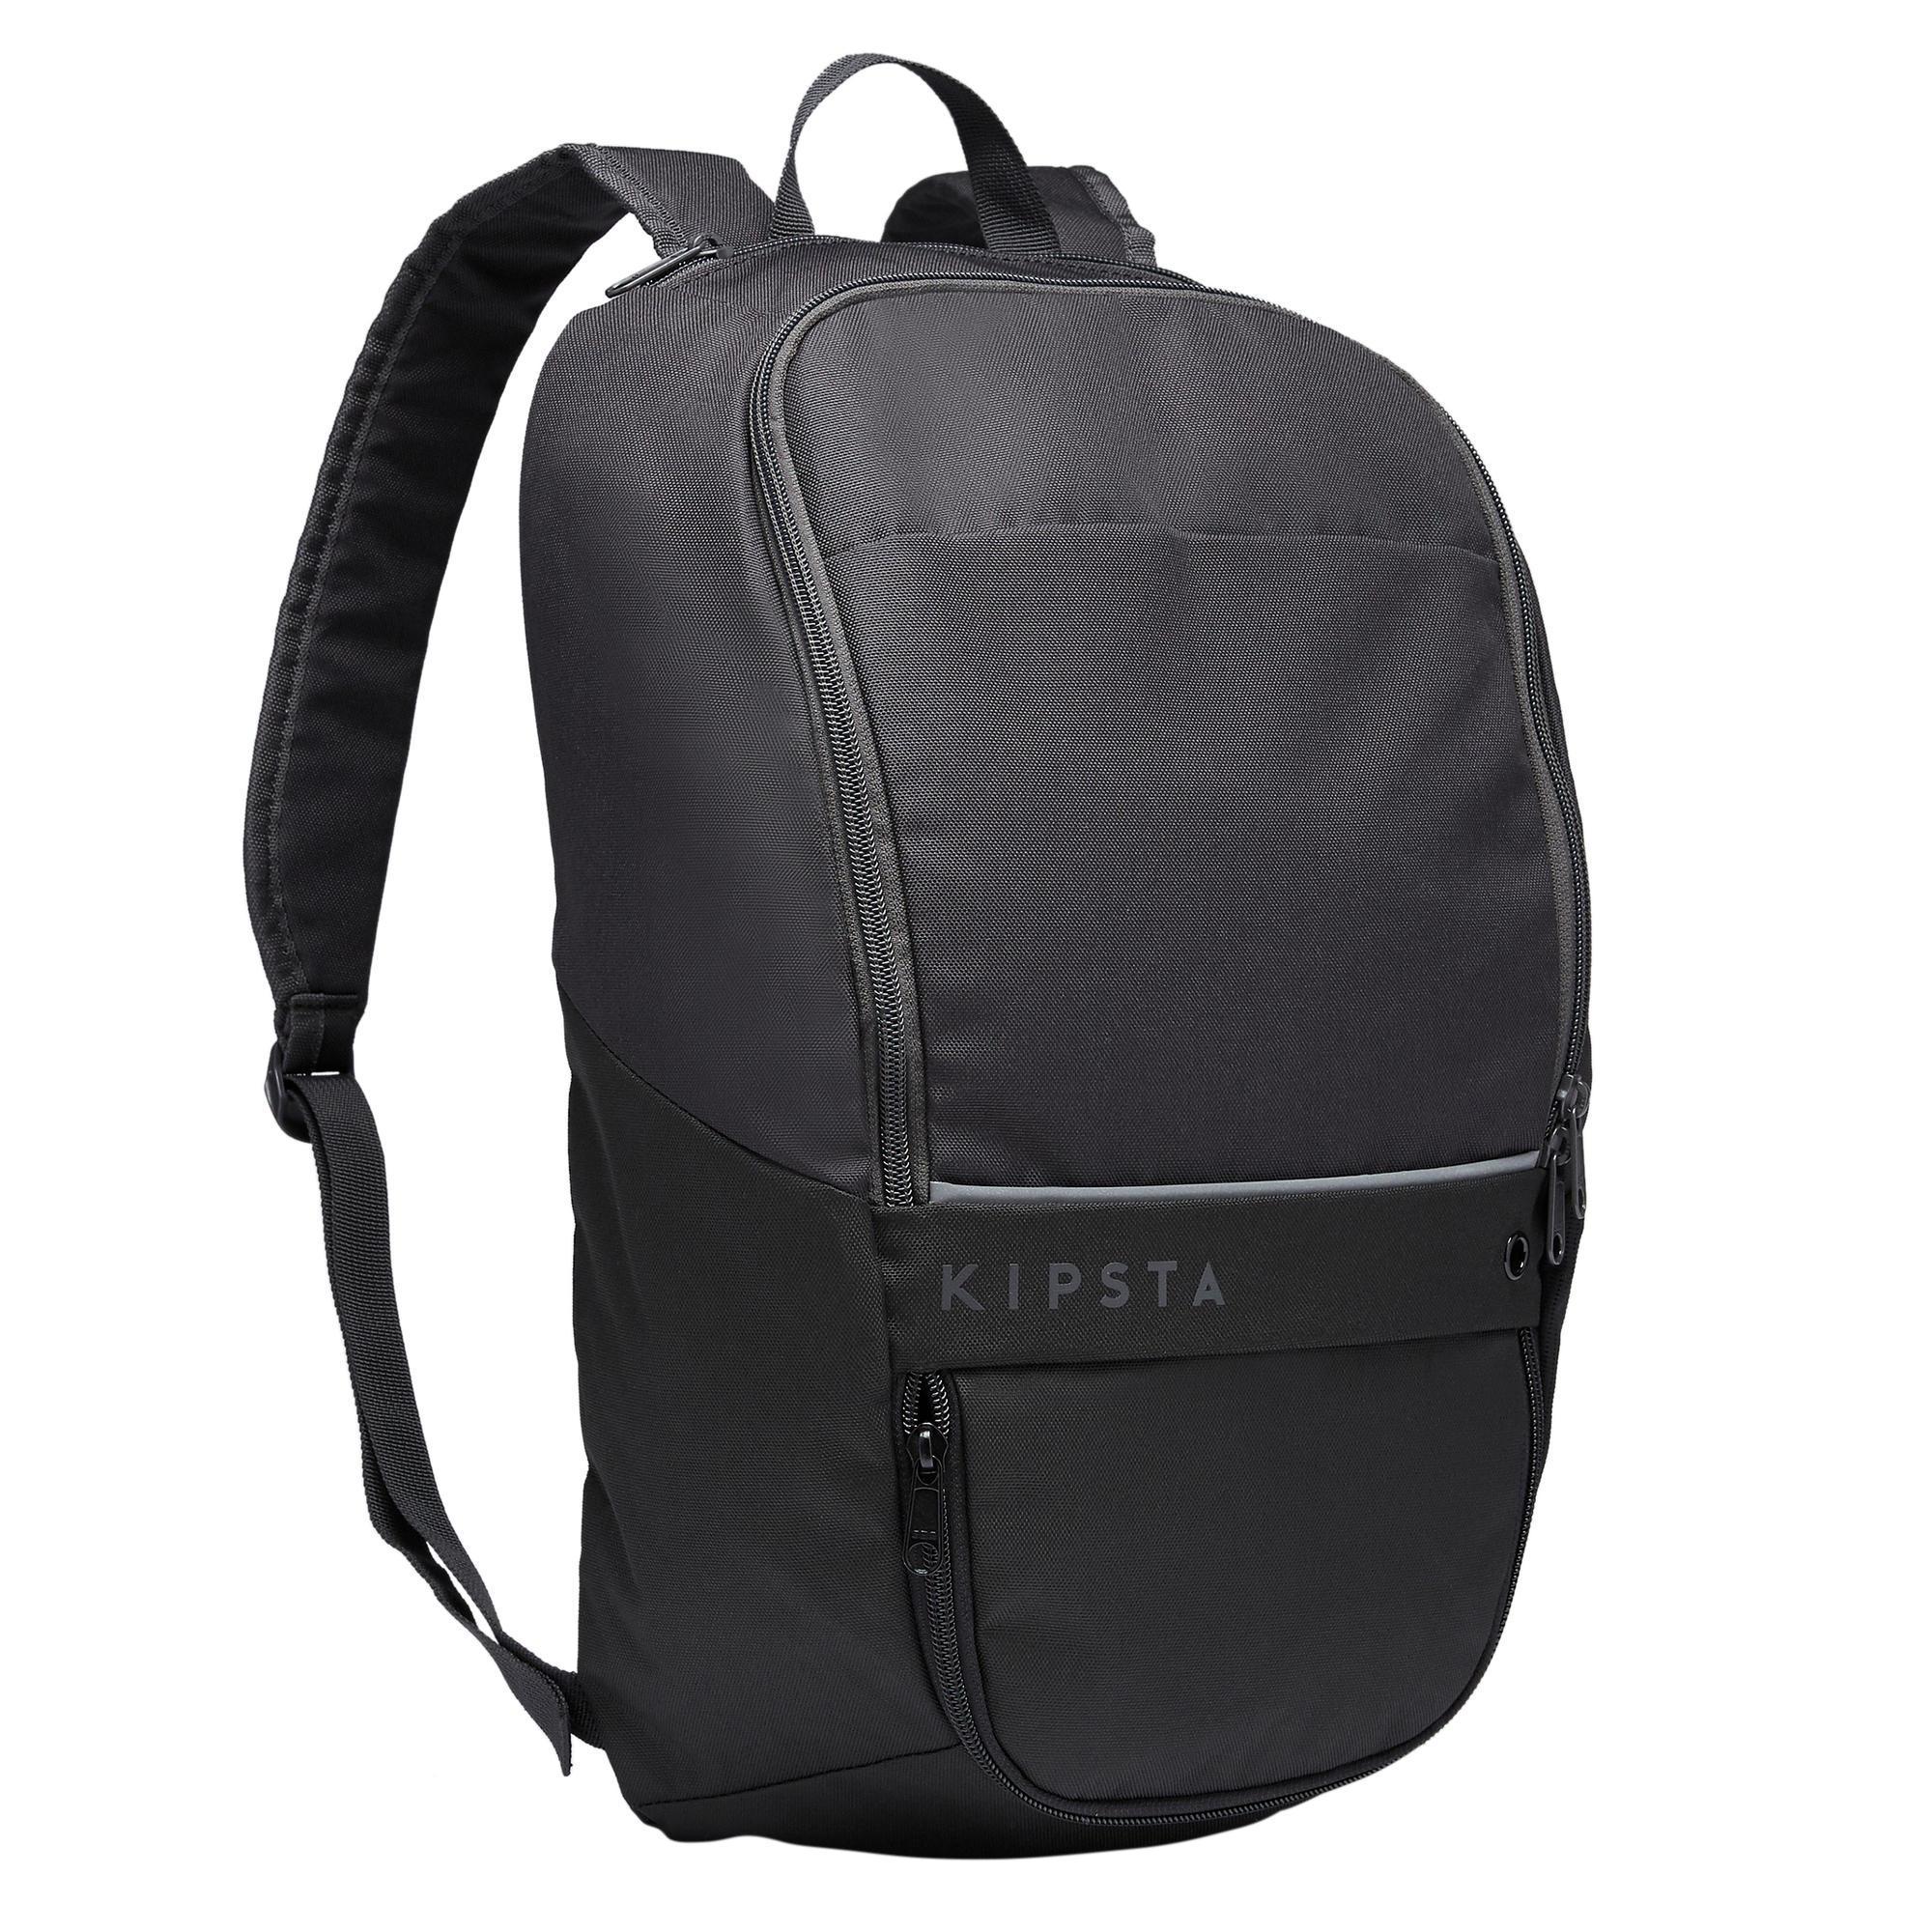 decathlon 65 litre backpack